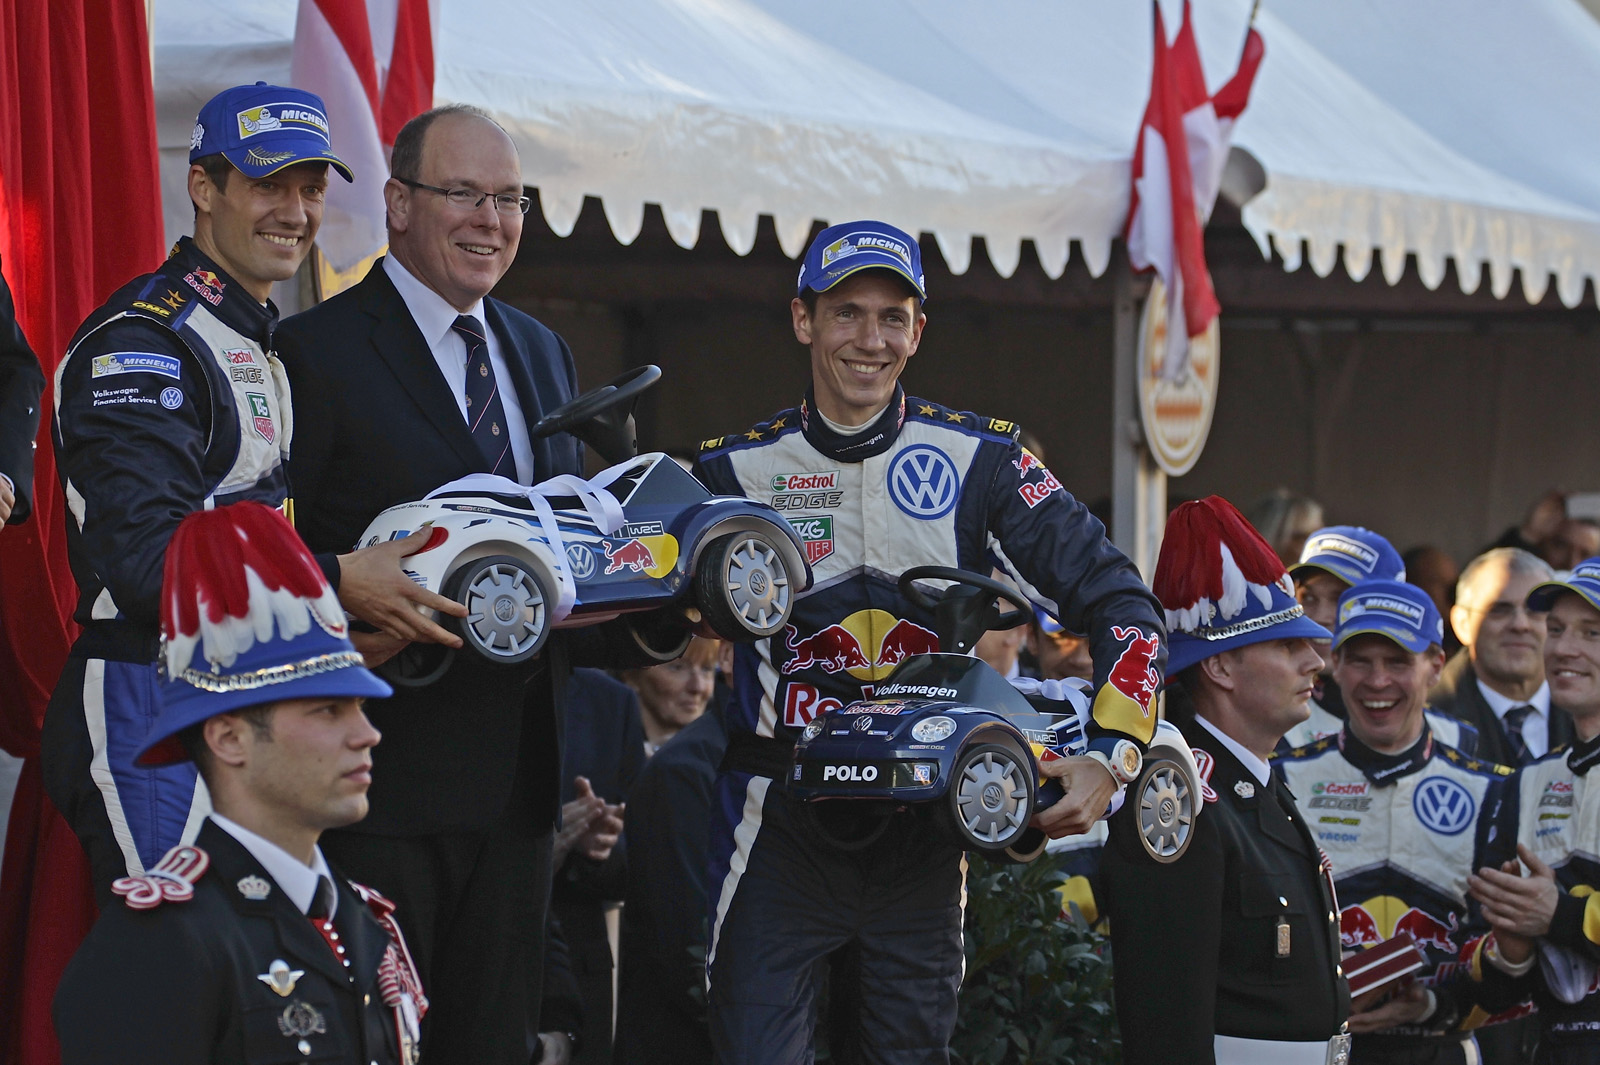 Rally Monte Carlo 2015